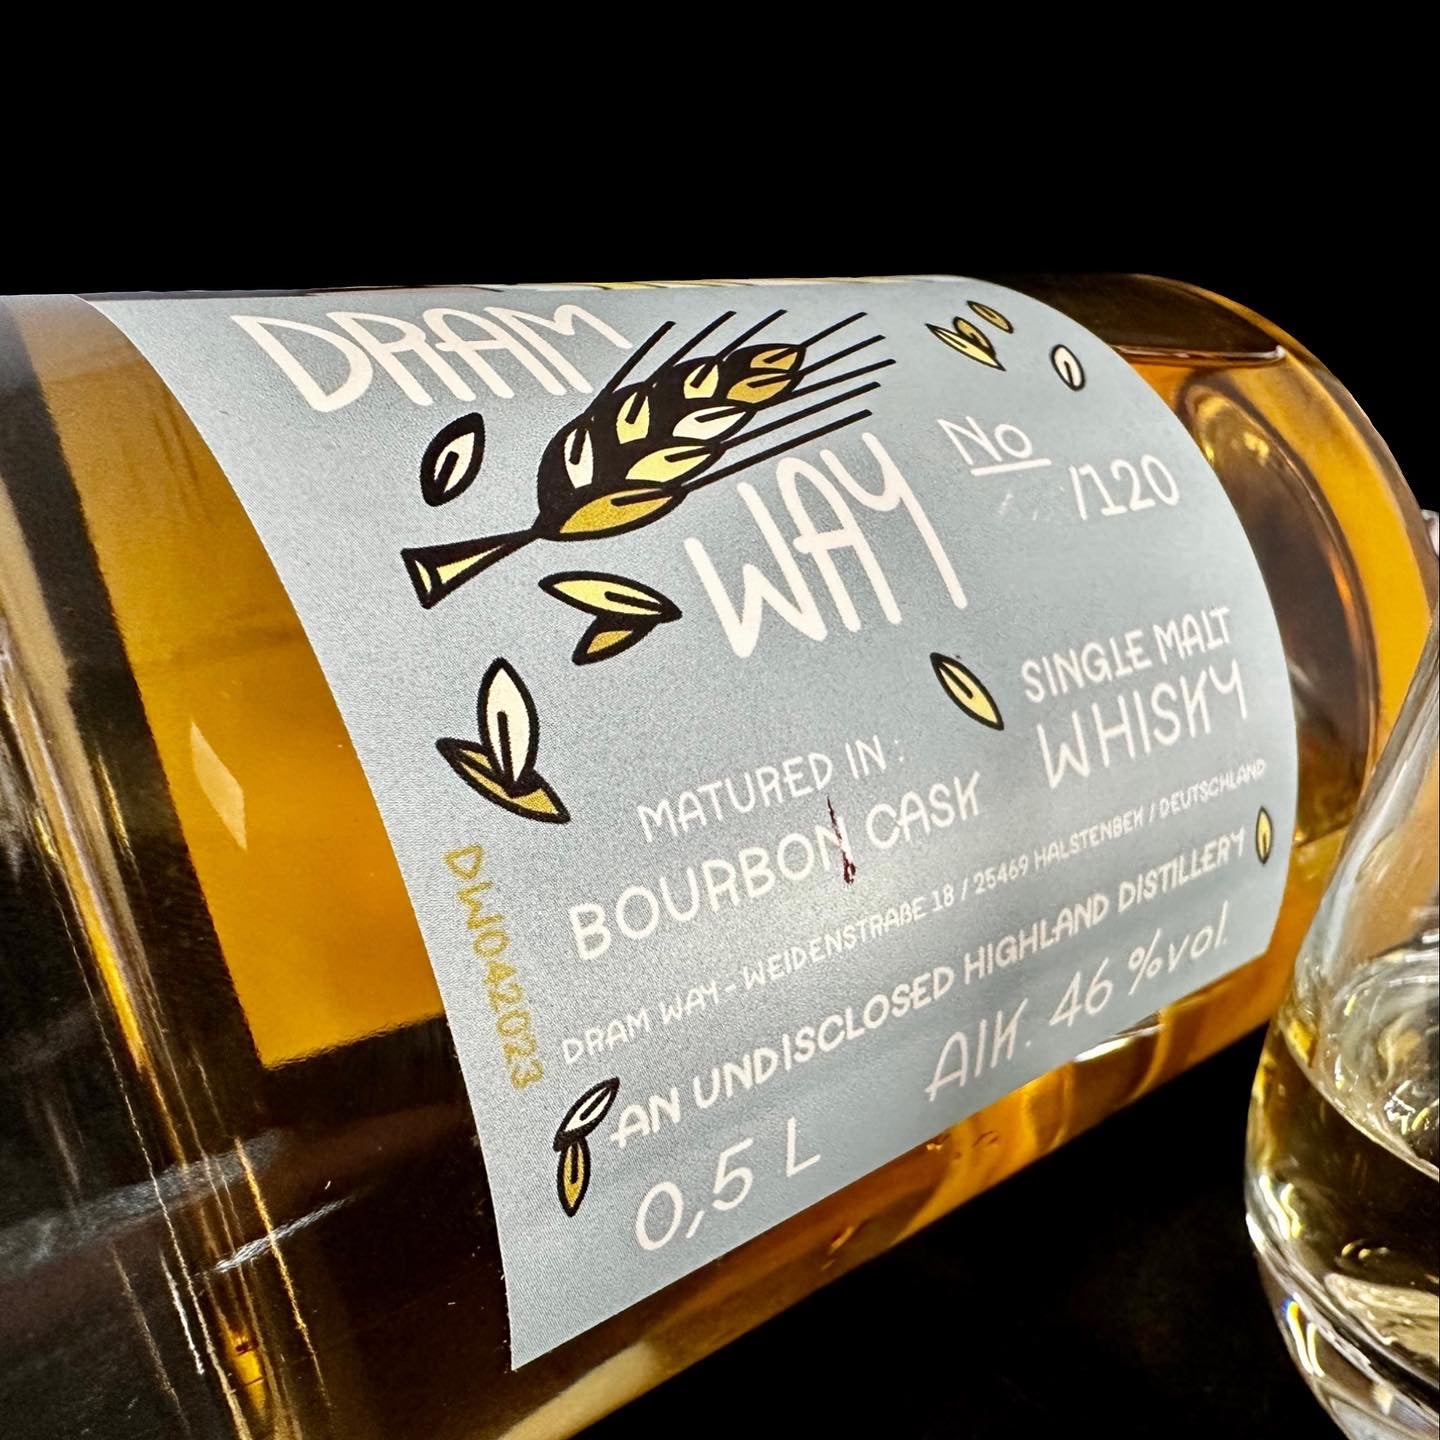 Dram Way 04 - An Undisclosed Highland Distillery